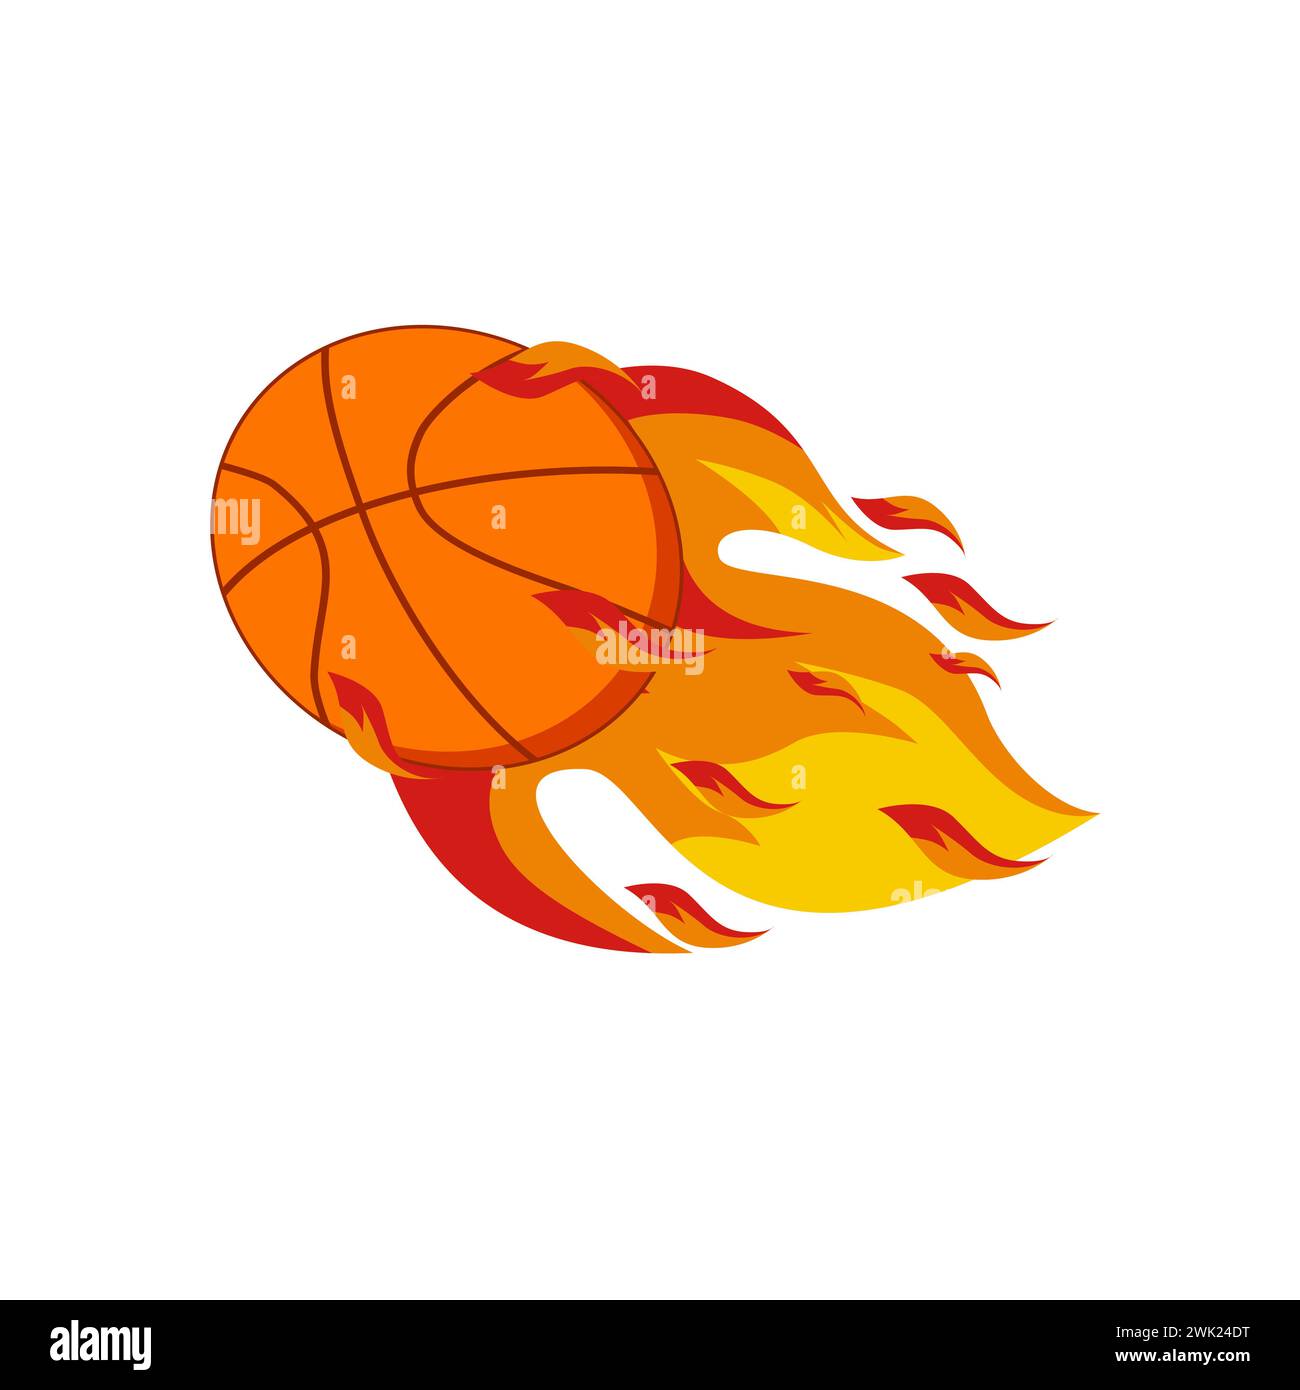 Illustration of Flying Basket ball on fire Stock Vector